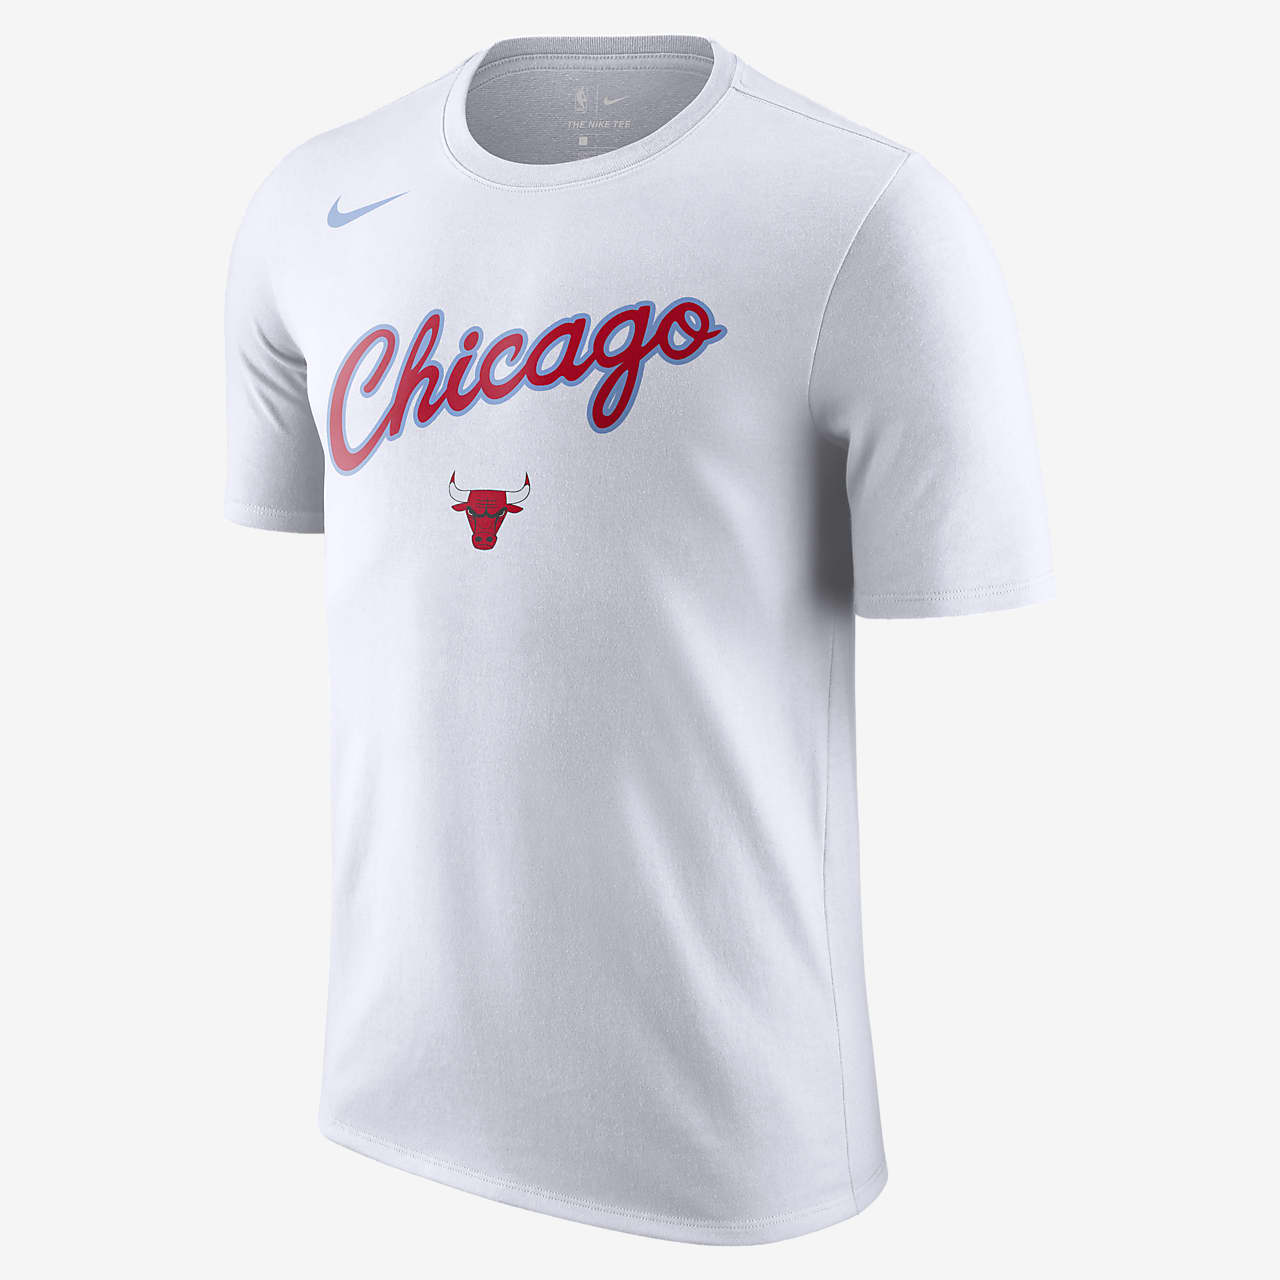 chicago bulls city shirt